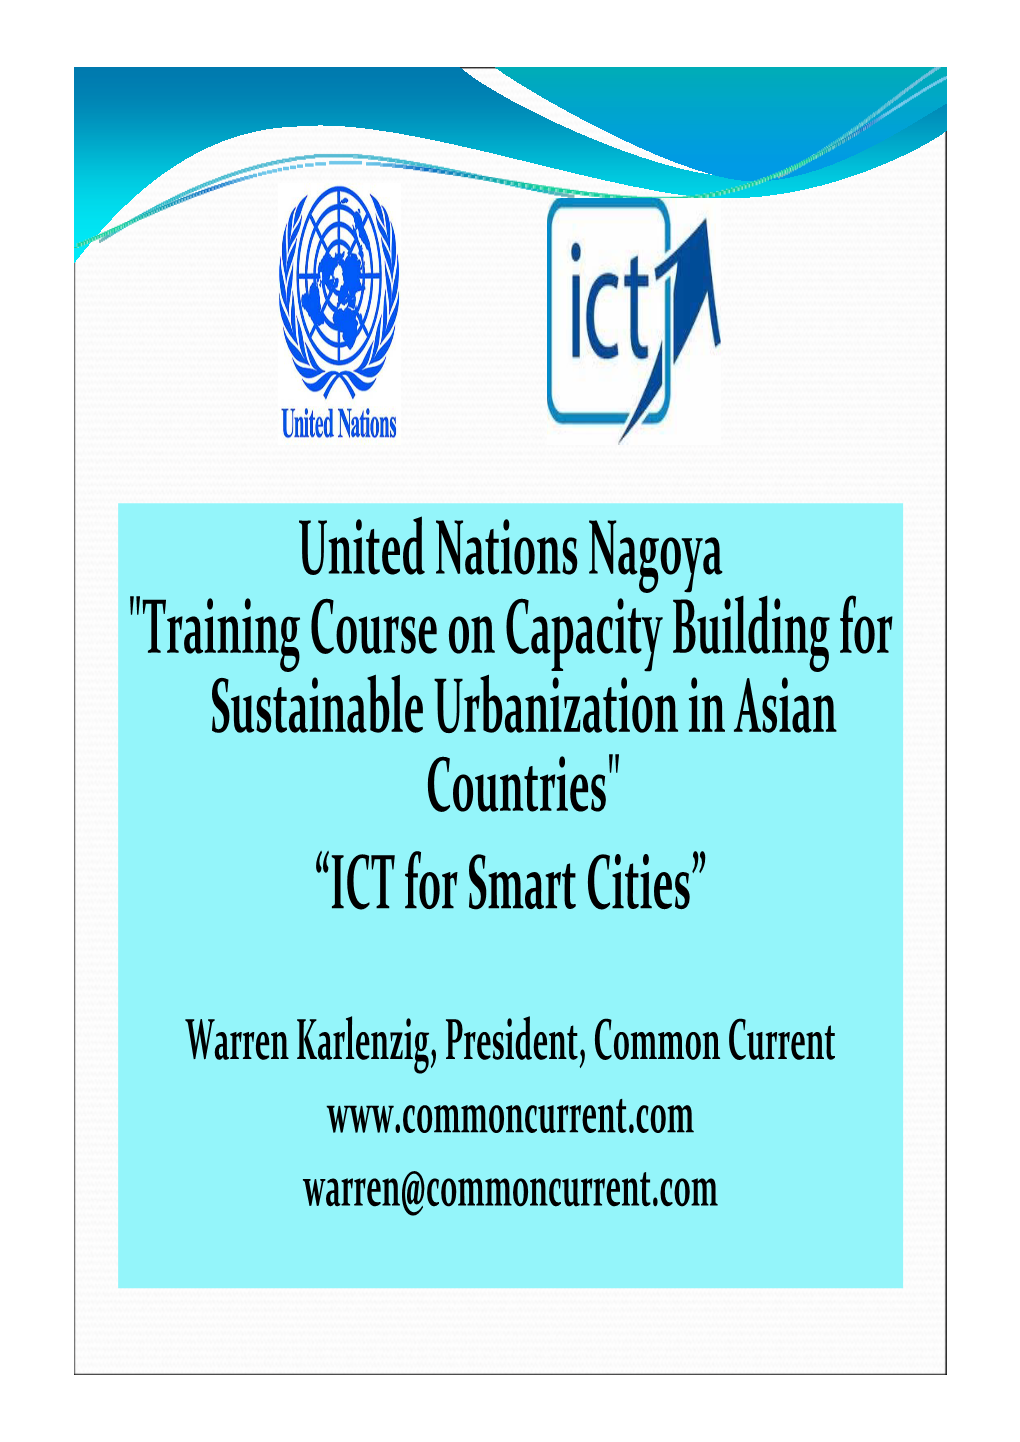 ICT for Smart Cities”